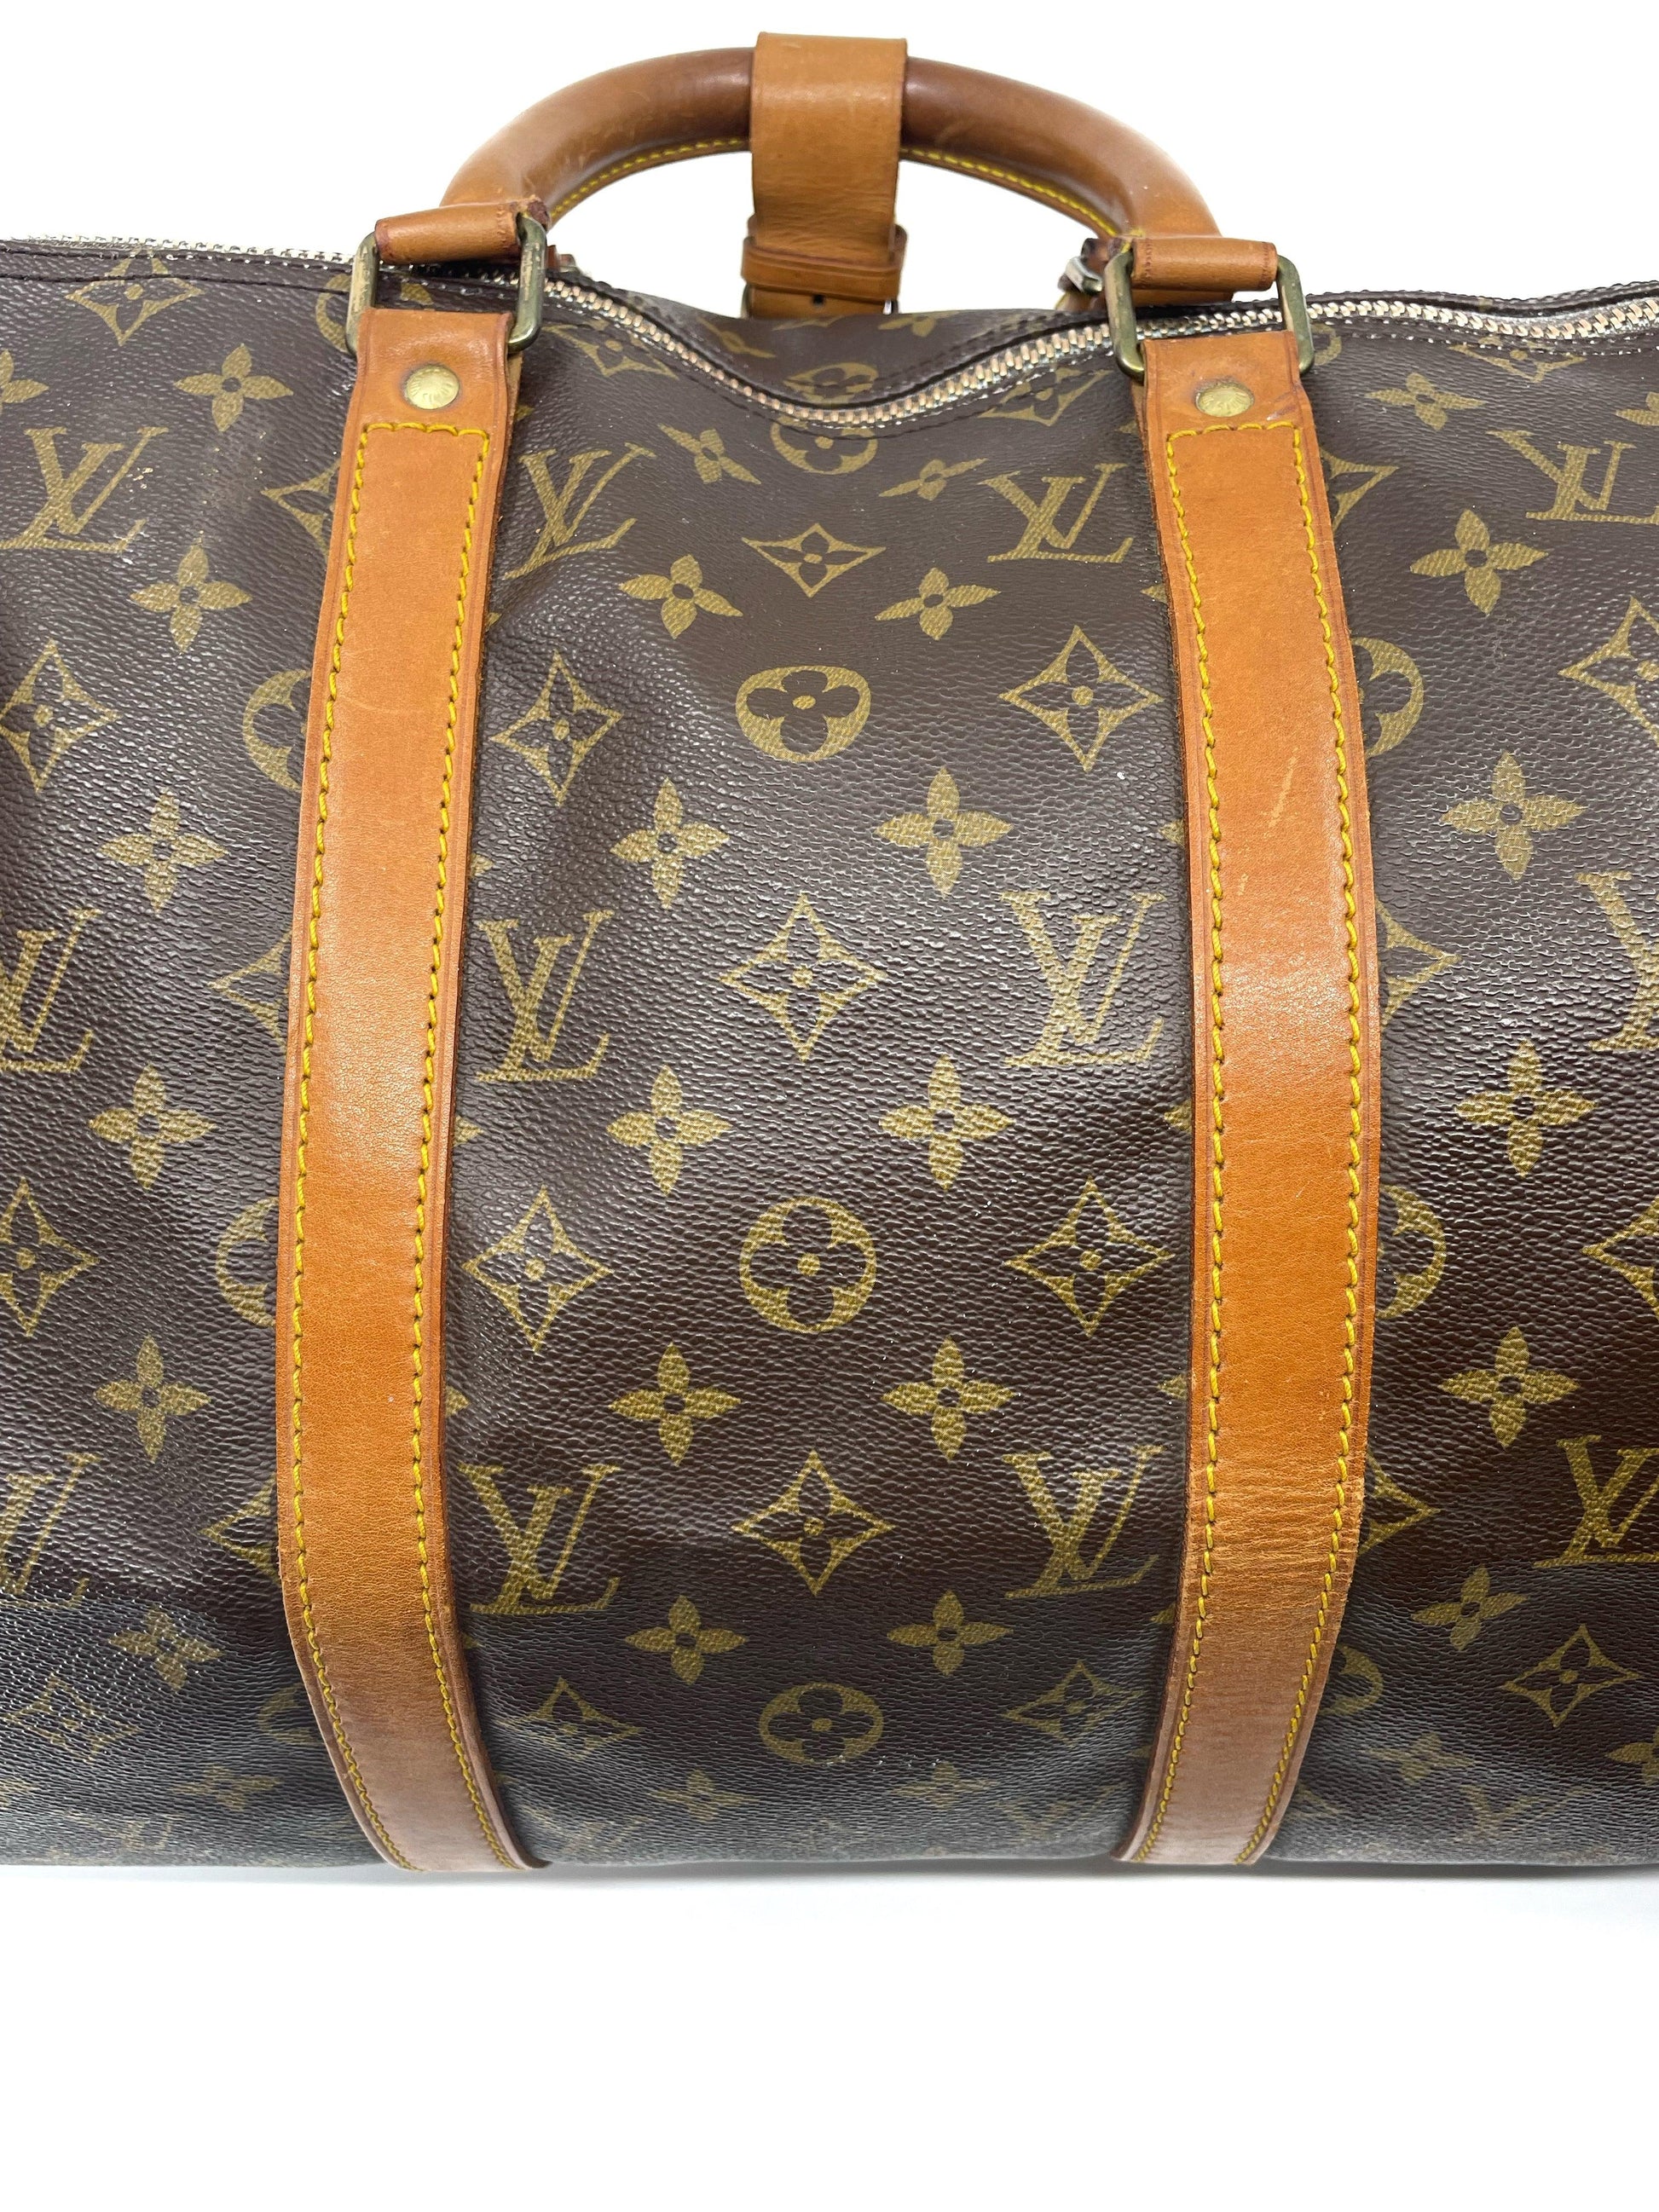 Louis Vuitton Keepall 50 Bag Review 